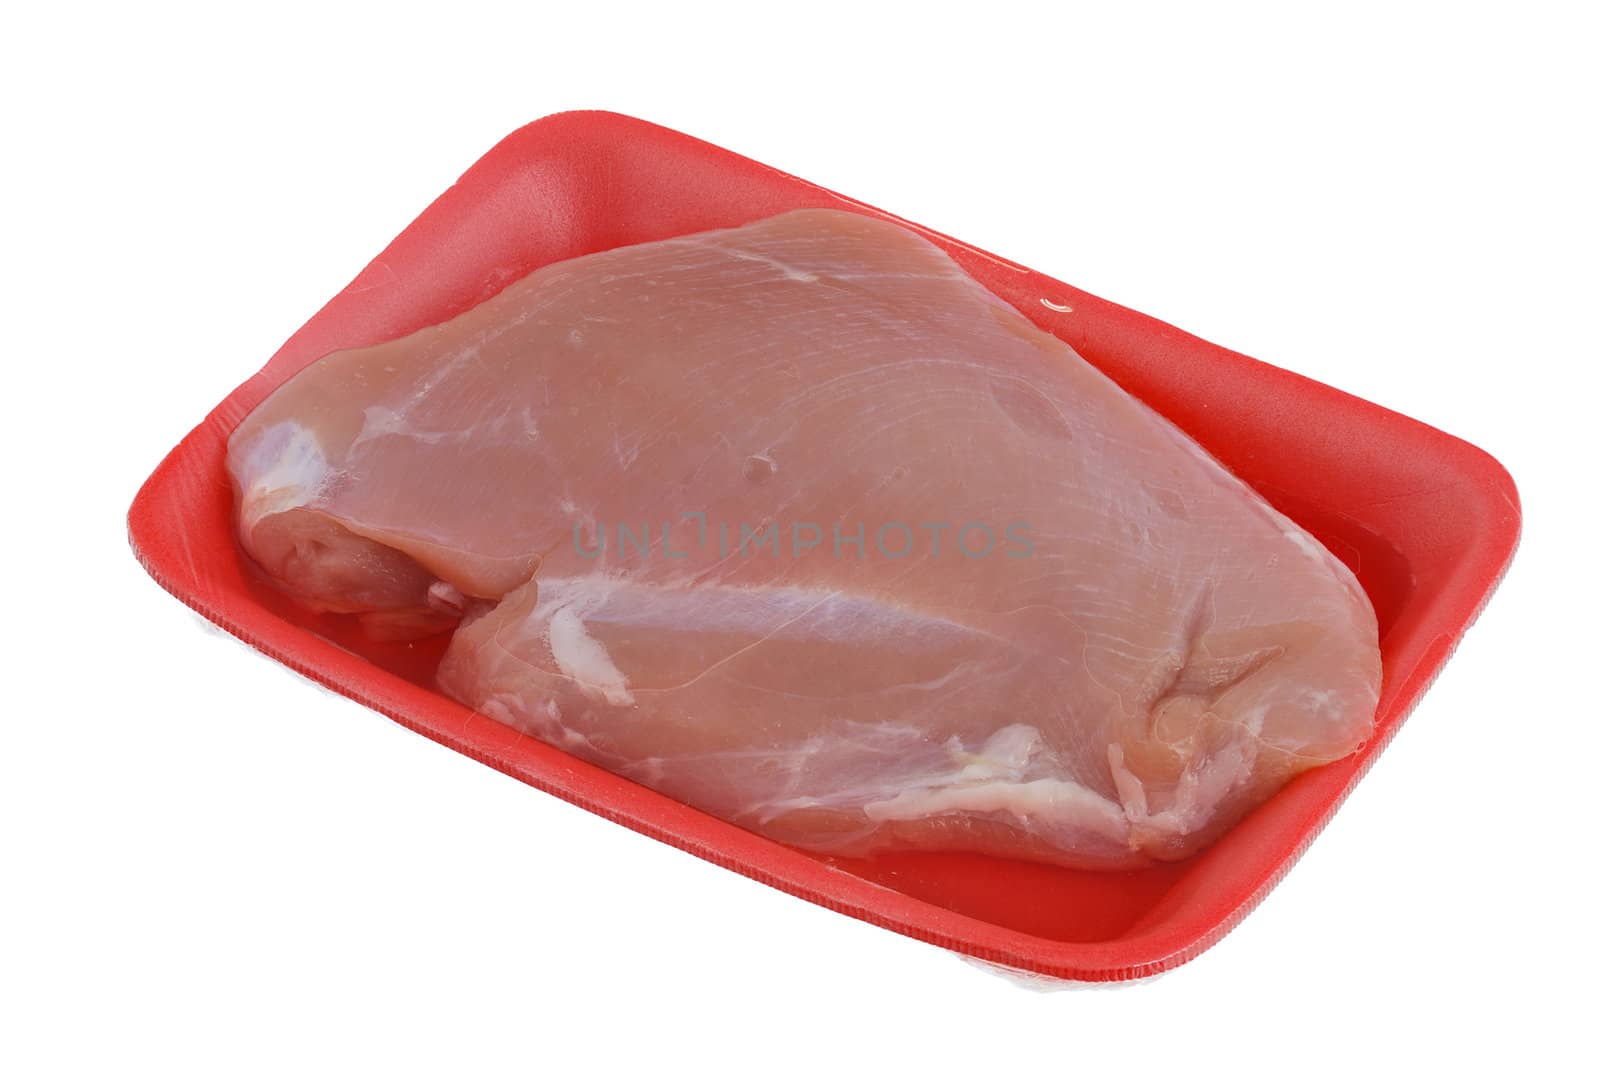 Raw turkey breast on orange foam meat tray by vadidak